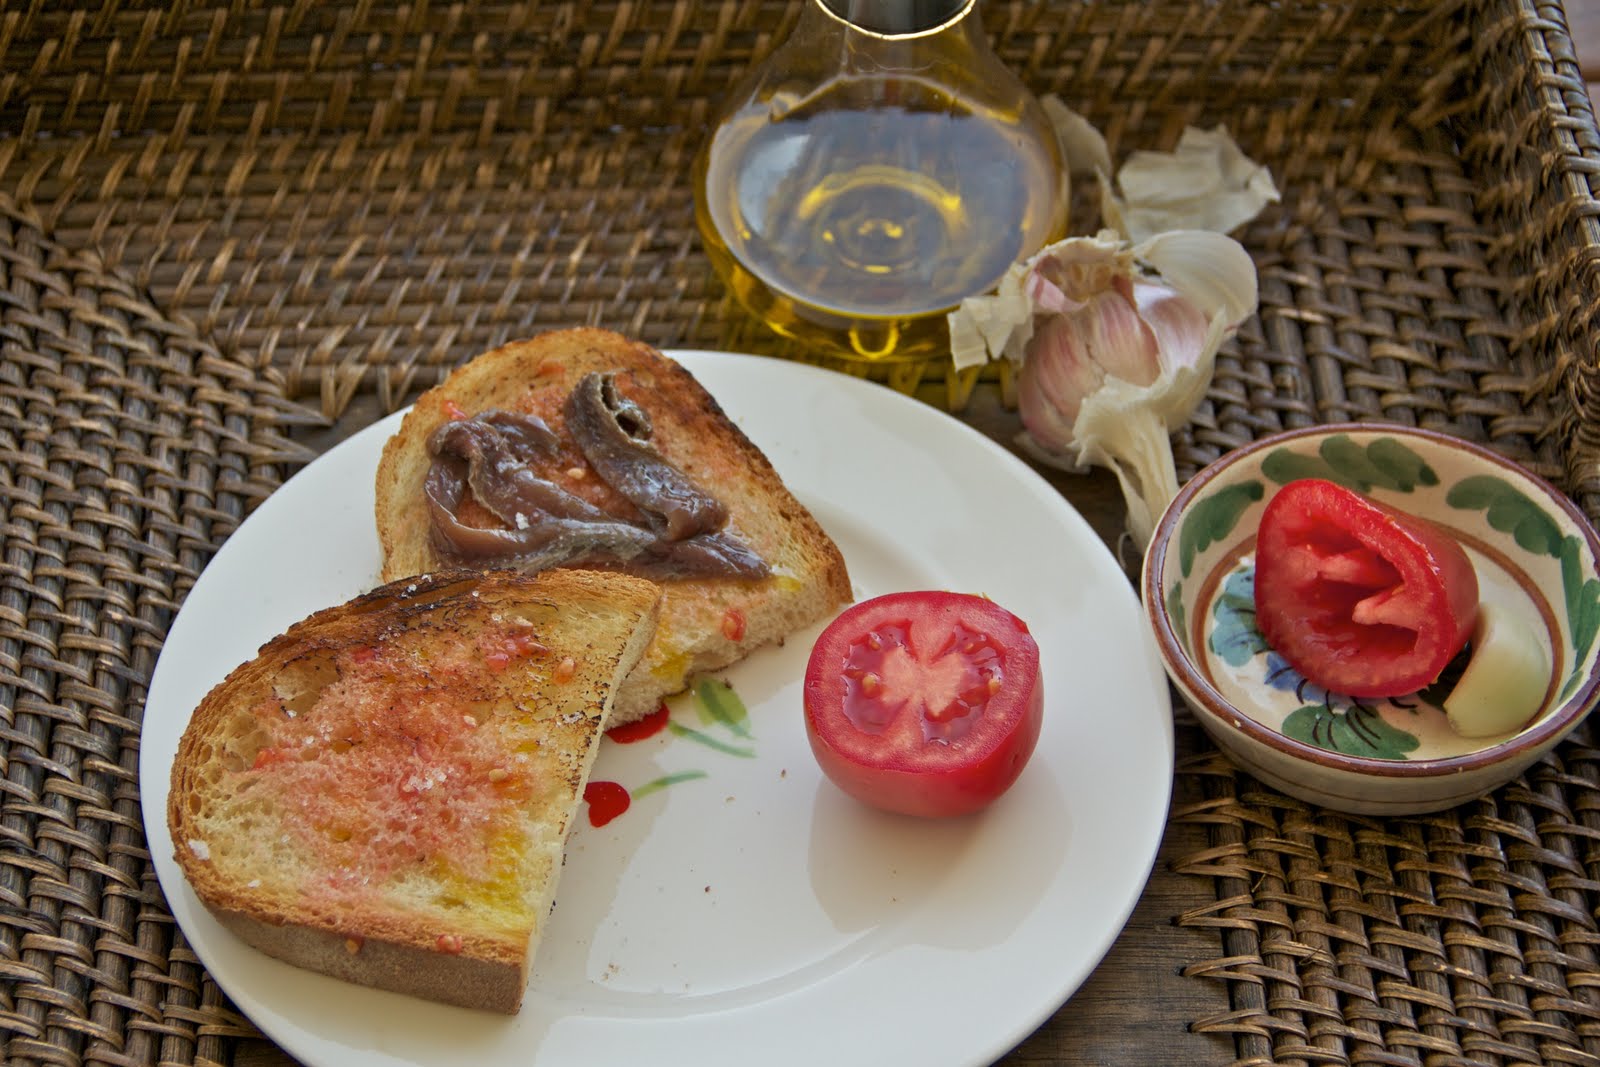 freshfromevaskitchen: Spanish Tapas - Tomato Bread and Chocolate Bread